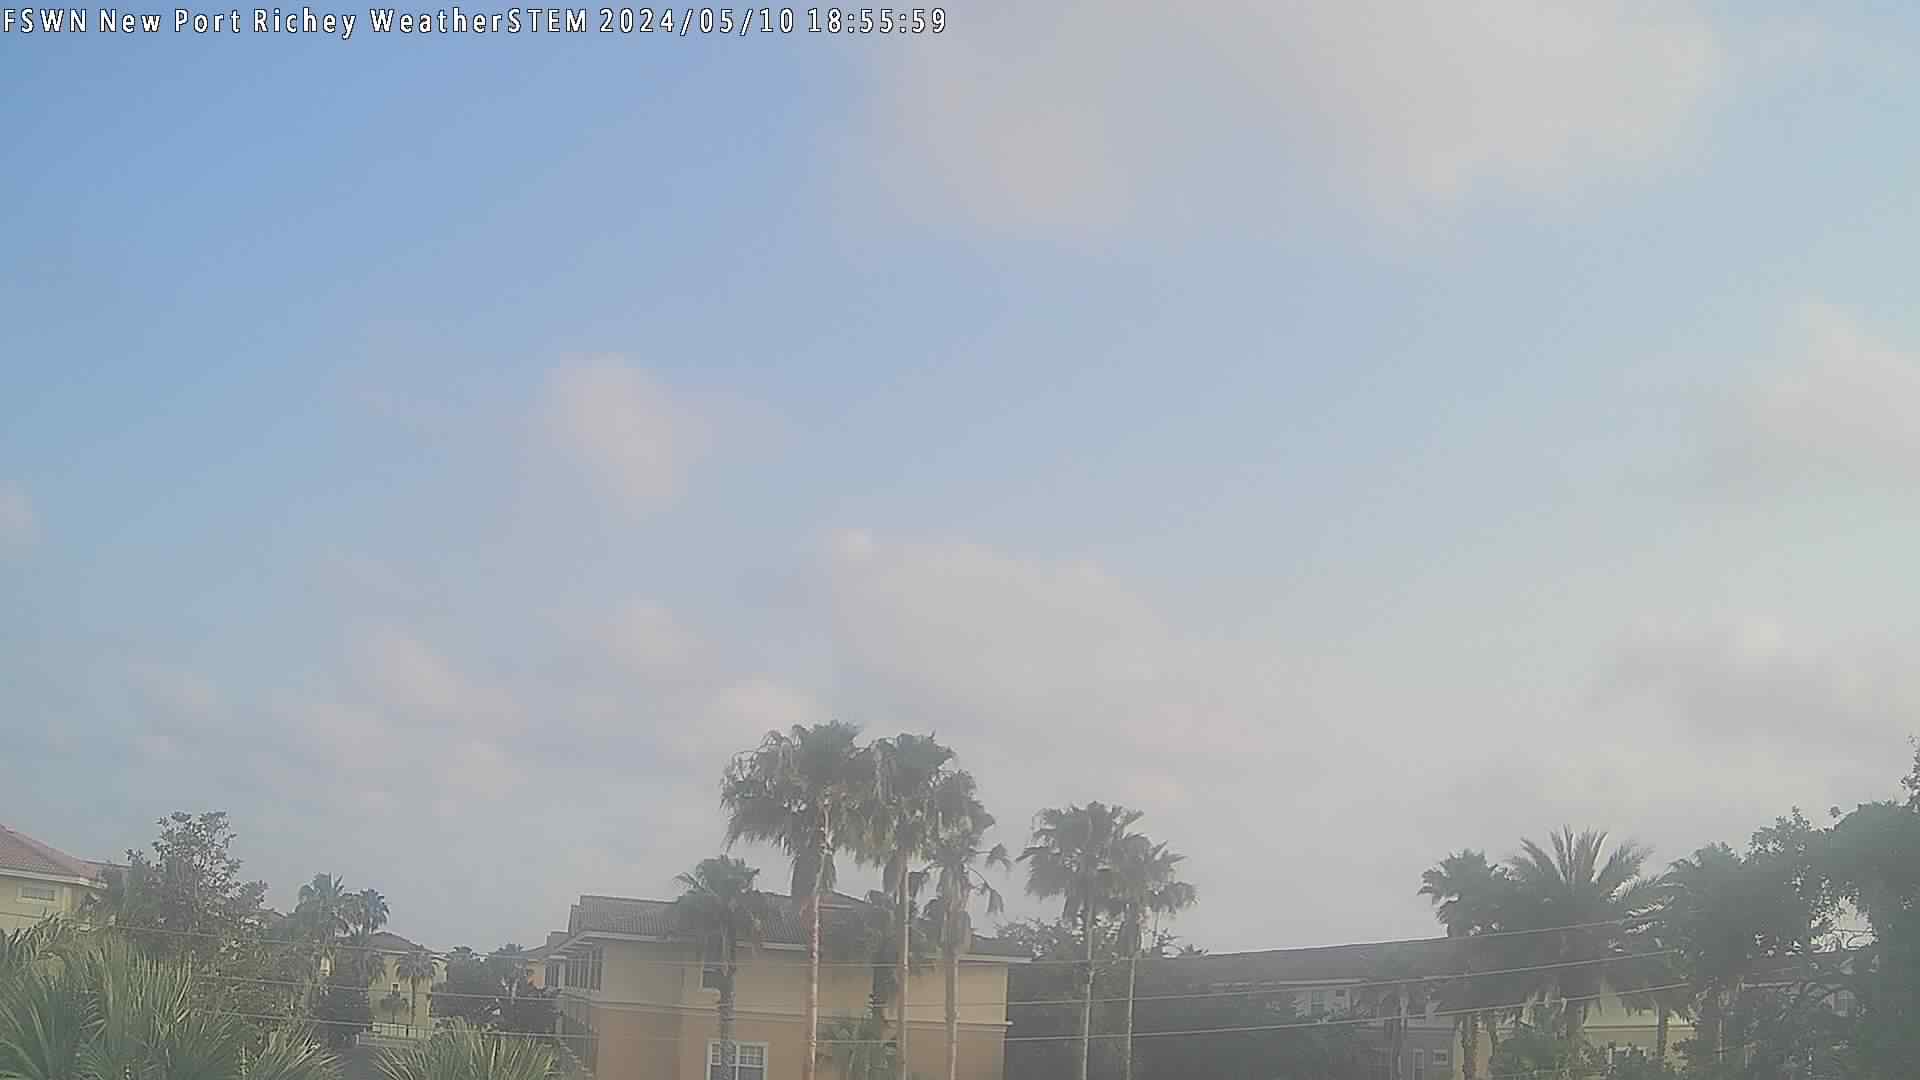  WeatherSTEM Cloud Camera FSWNPascoNPR in Pasco County, Florida FL at FSWN Pasco New Port Richey